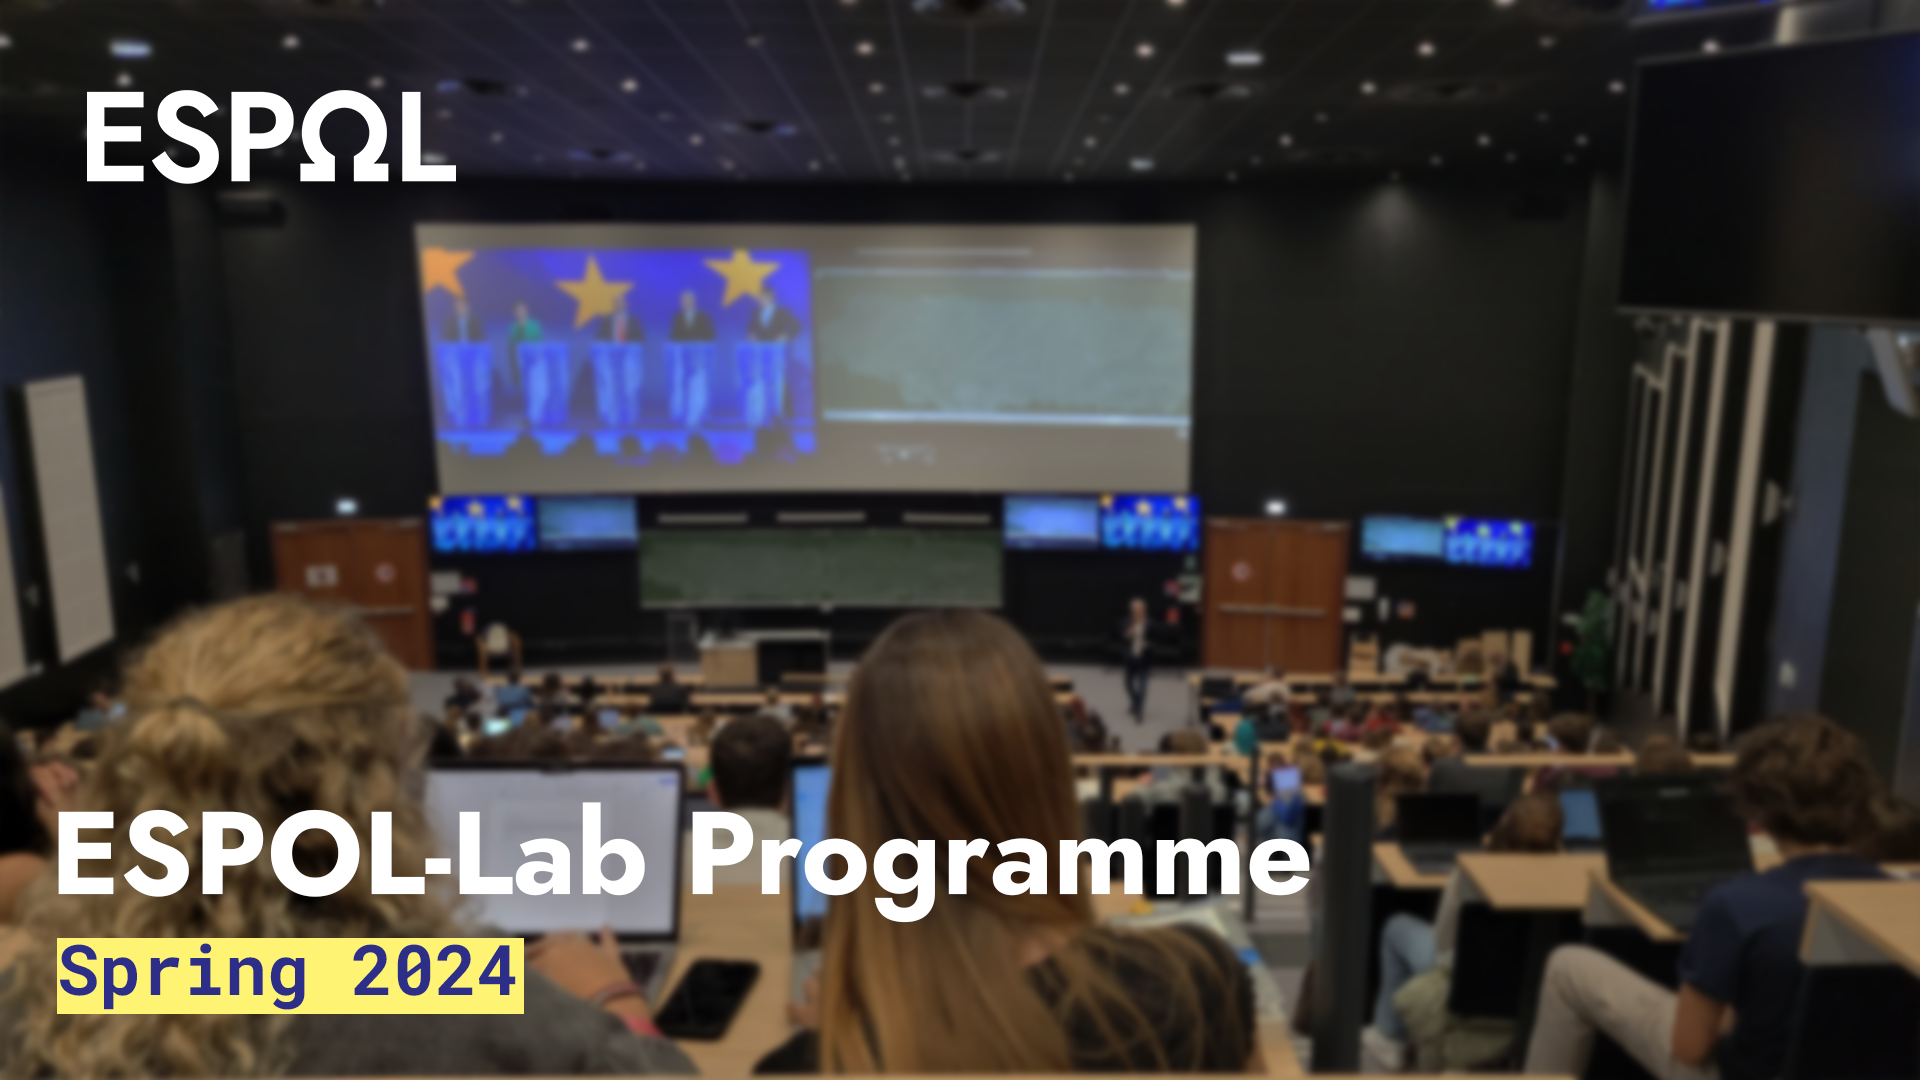 ESPOL-Lab: Spring 2024 Programme